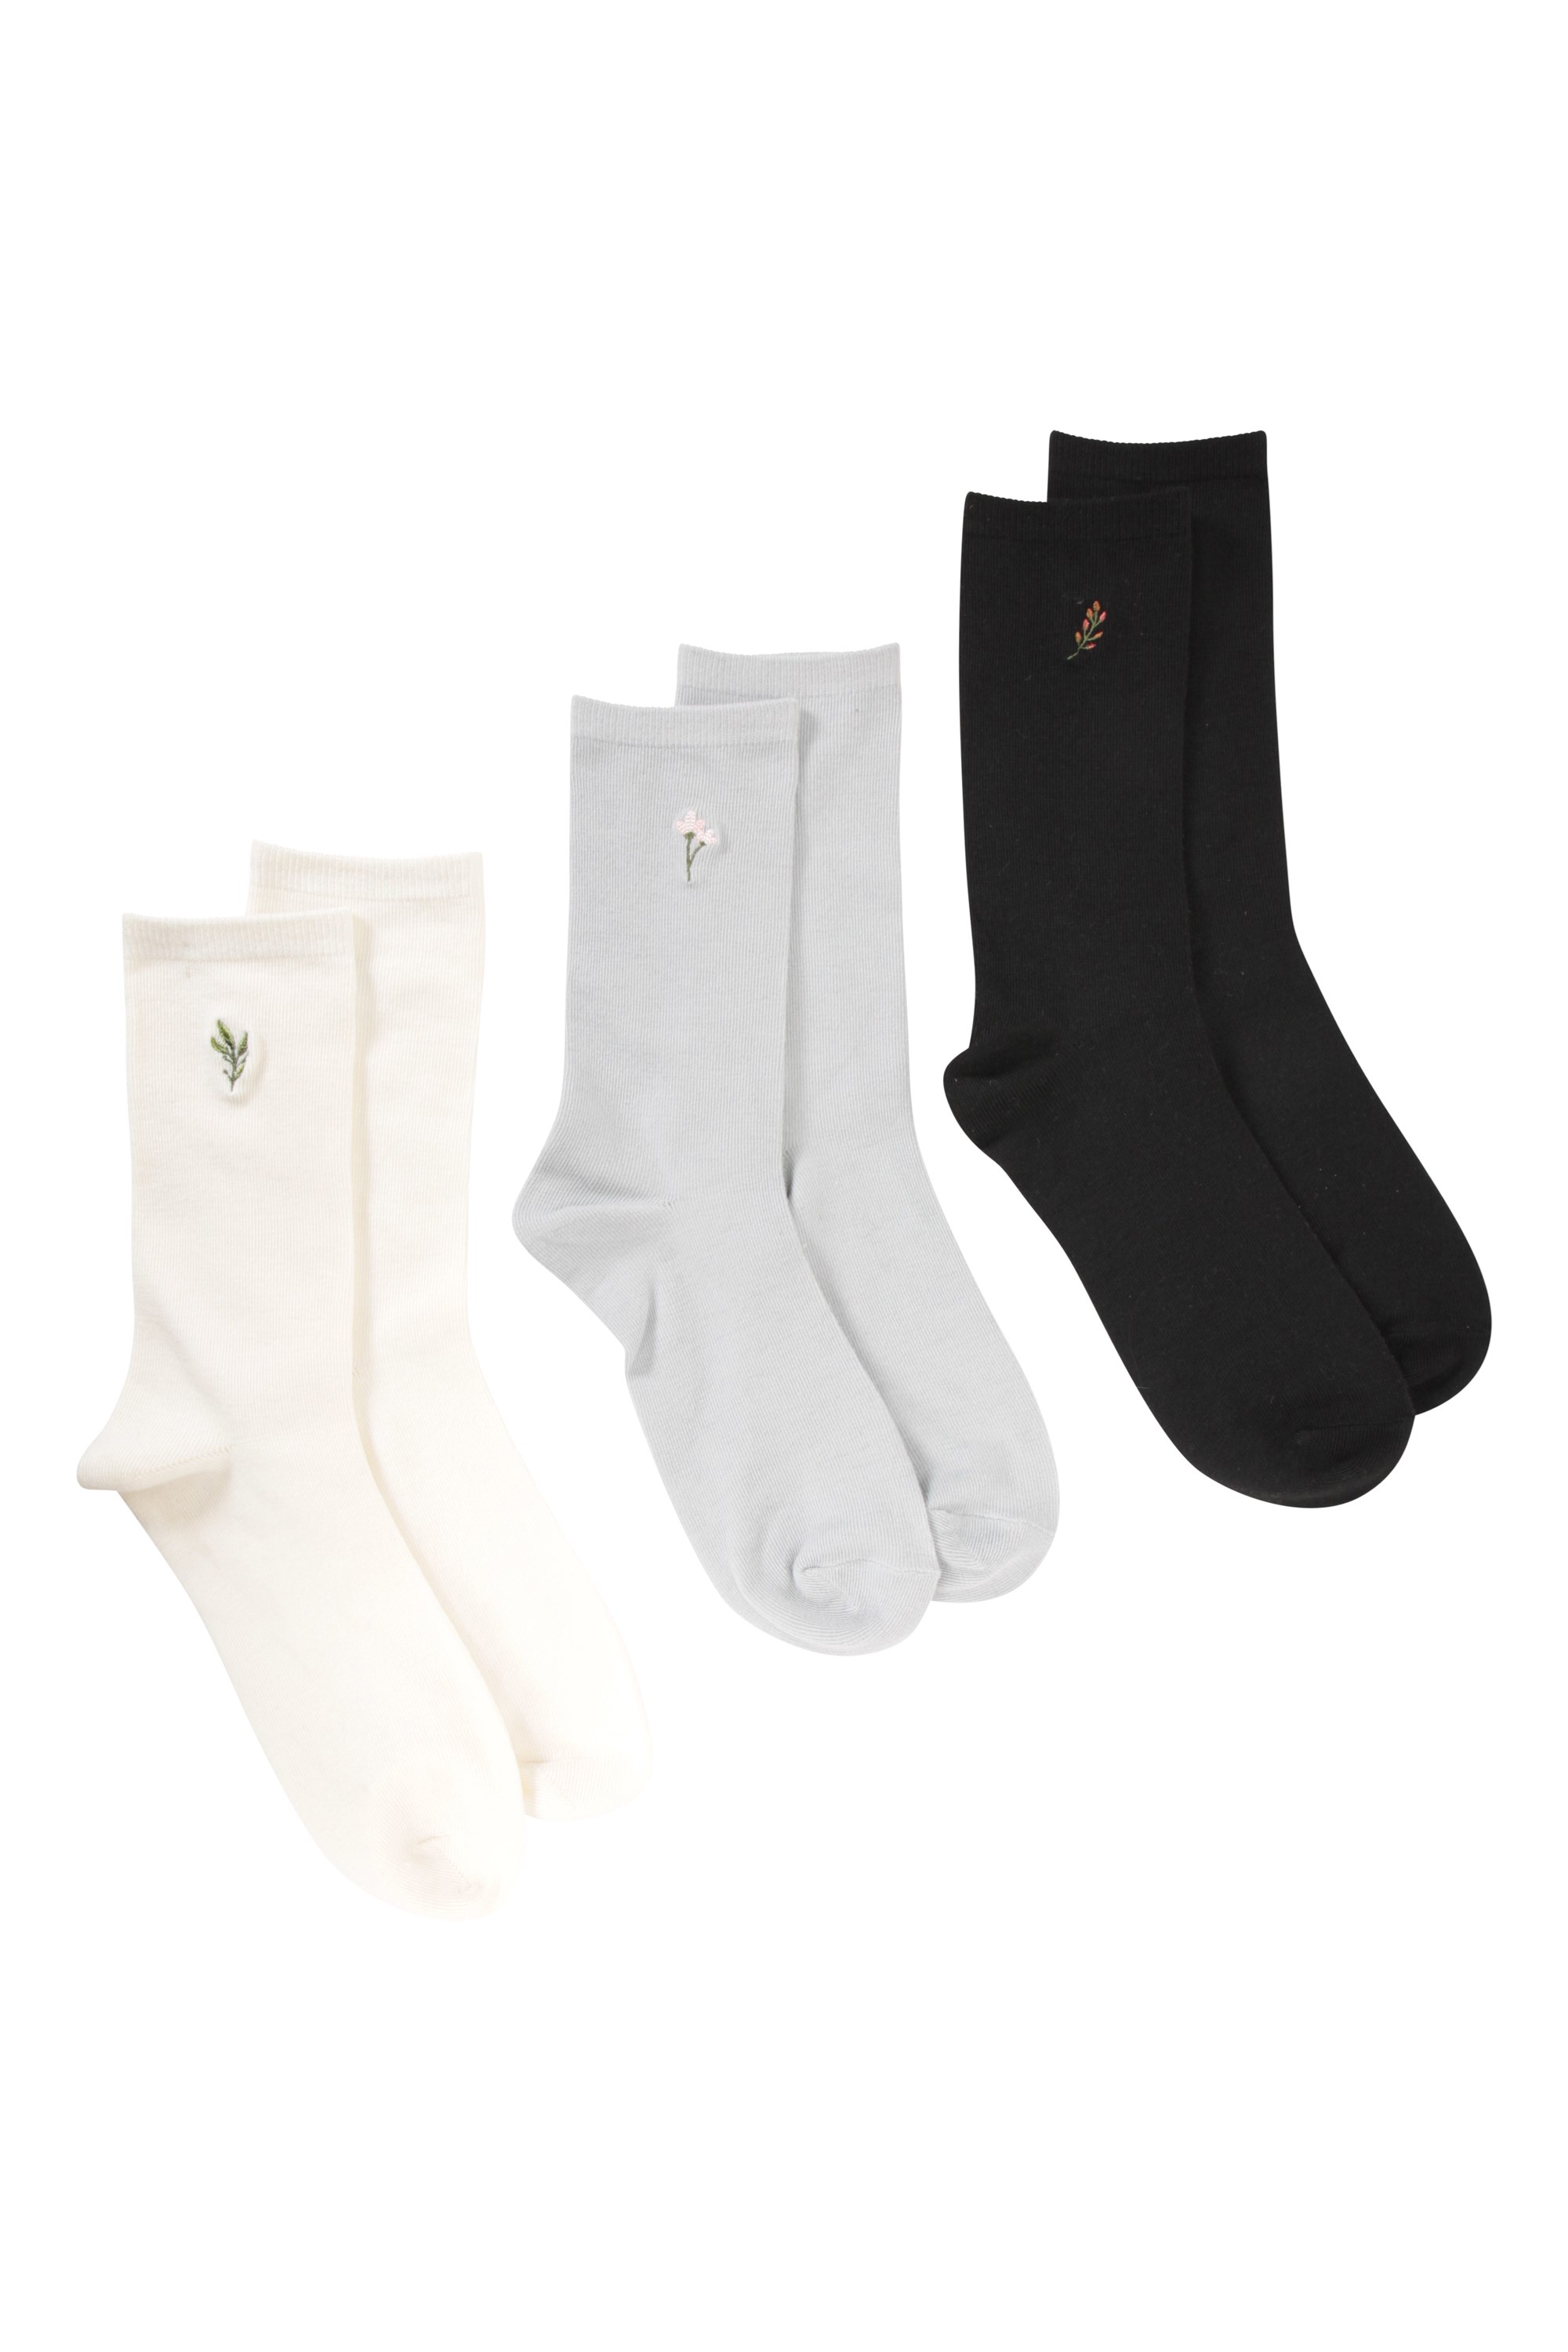 Recycled Womens Socks - Grey